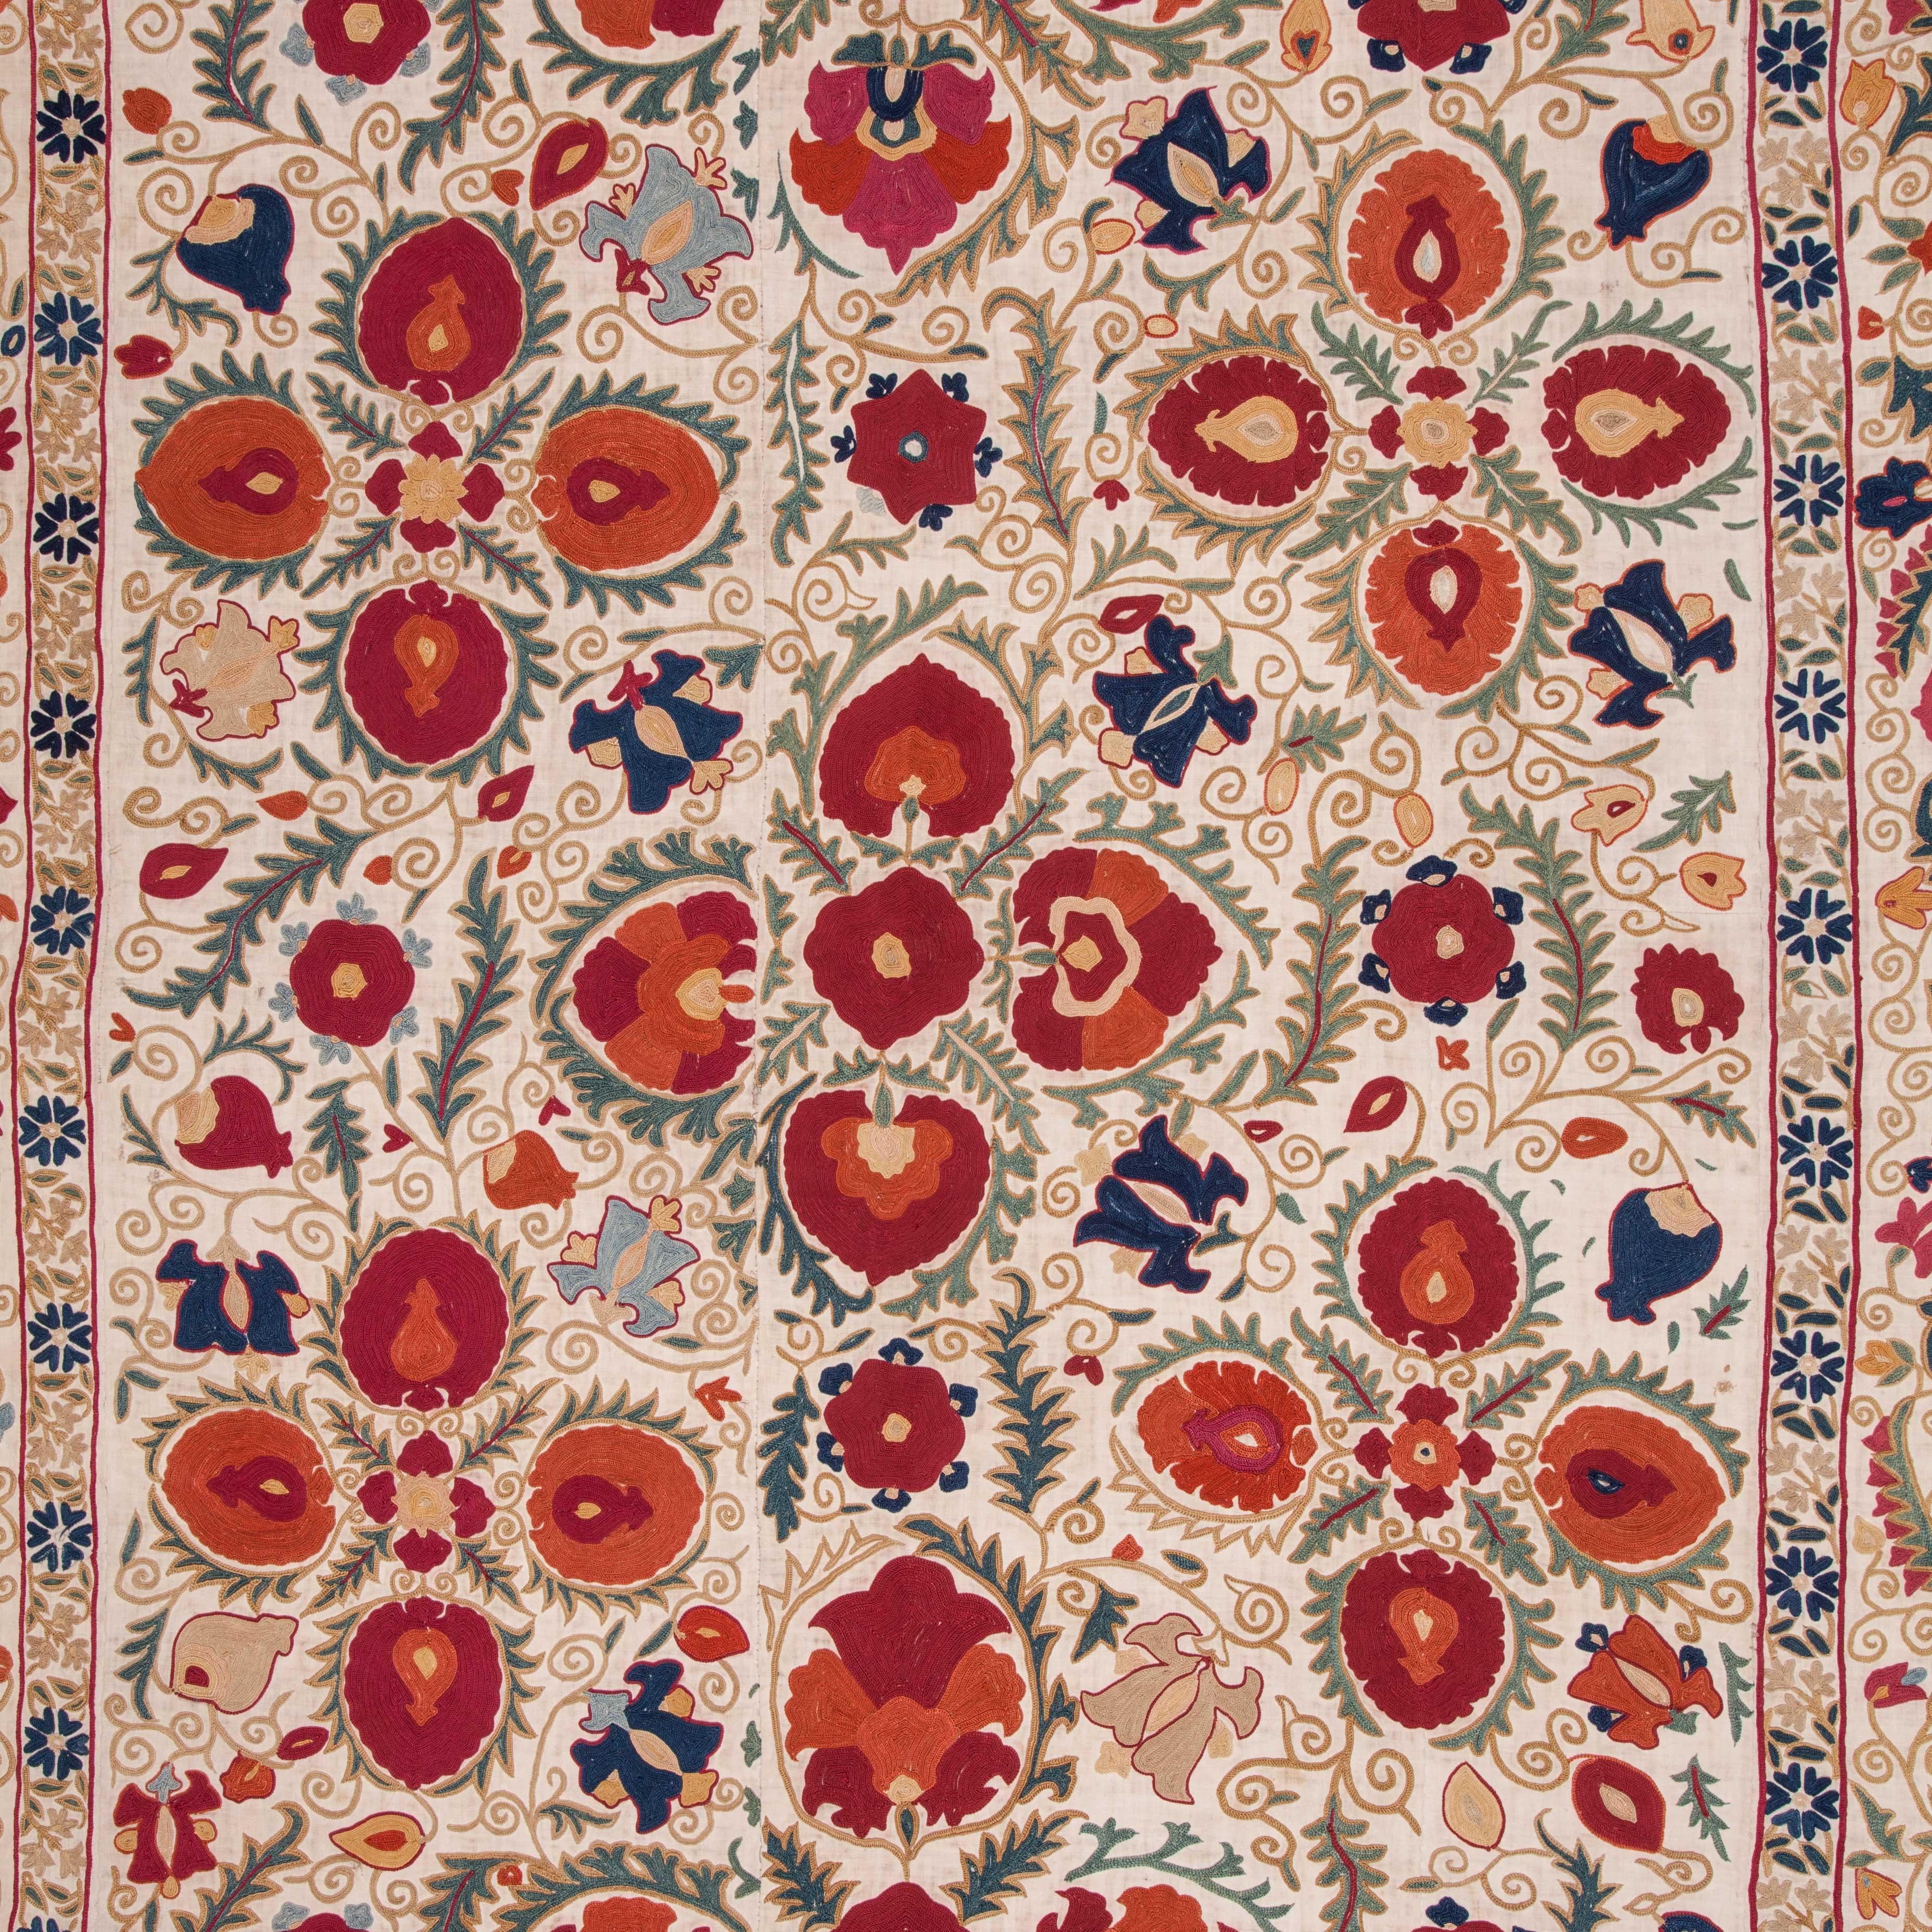 Cotton Antique Suzani from Bukhara Uzbekistan, Late 19th Century